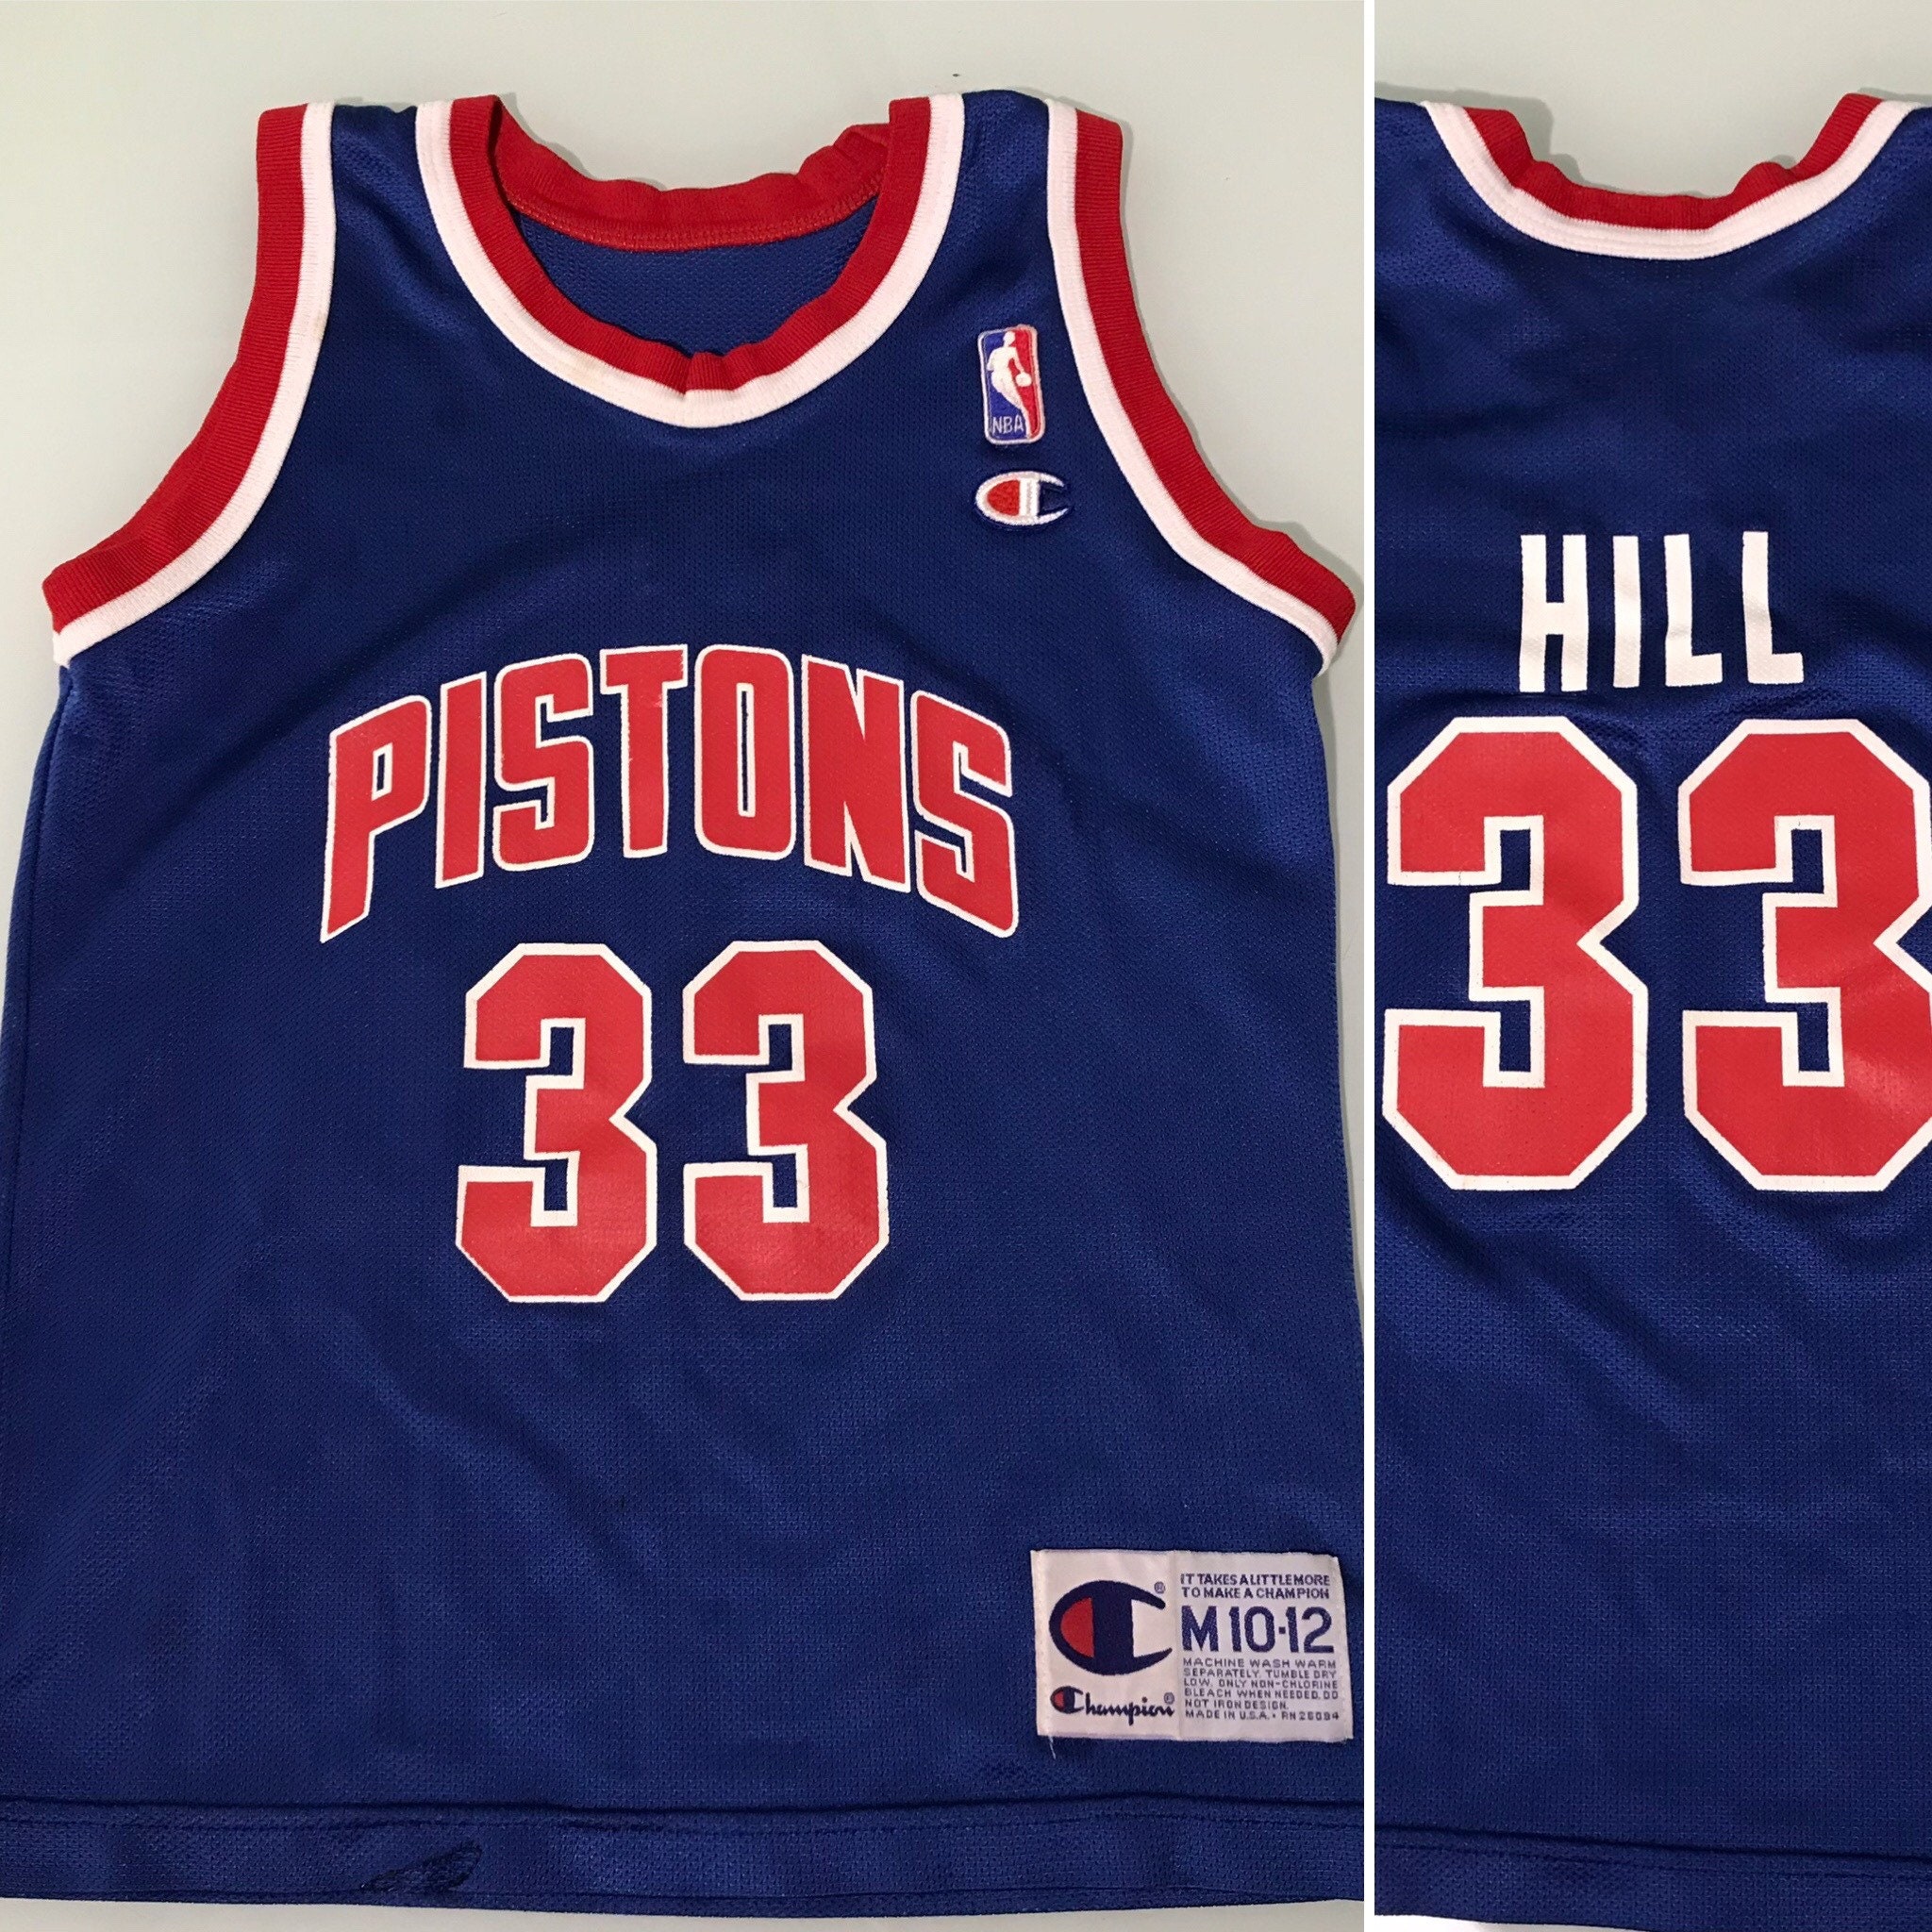 Wyco Vintage 1990s Grant Hill Detroit Pistons NBA Jersey